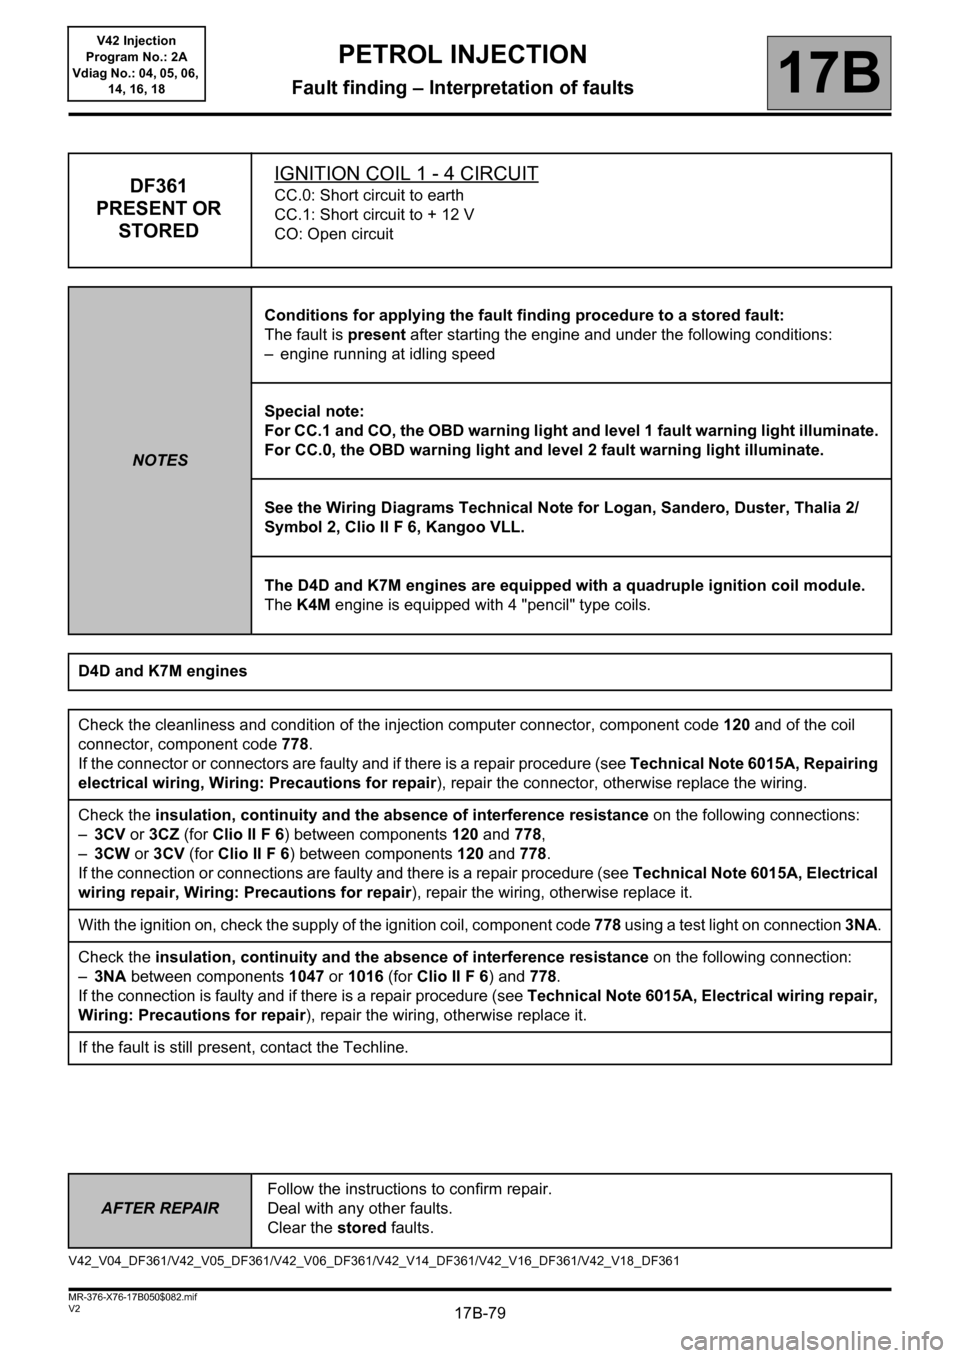 RENAULT KANGOO 2013 X61 / 2.G Petrol V42 Injection Workshop Manual 17B-79V2 MR-376-X76-17B050$082.mif
PETROL INJECTION
Fault finding – Interpretation of faults17B
V42 Injection
Program No.: 2A
Vdiag No.: 04, 05, 06, 
14, 16, 18
AFTER REPAIRFollow the instructions t